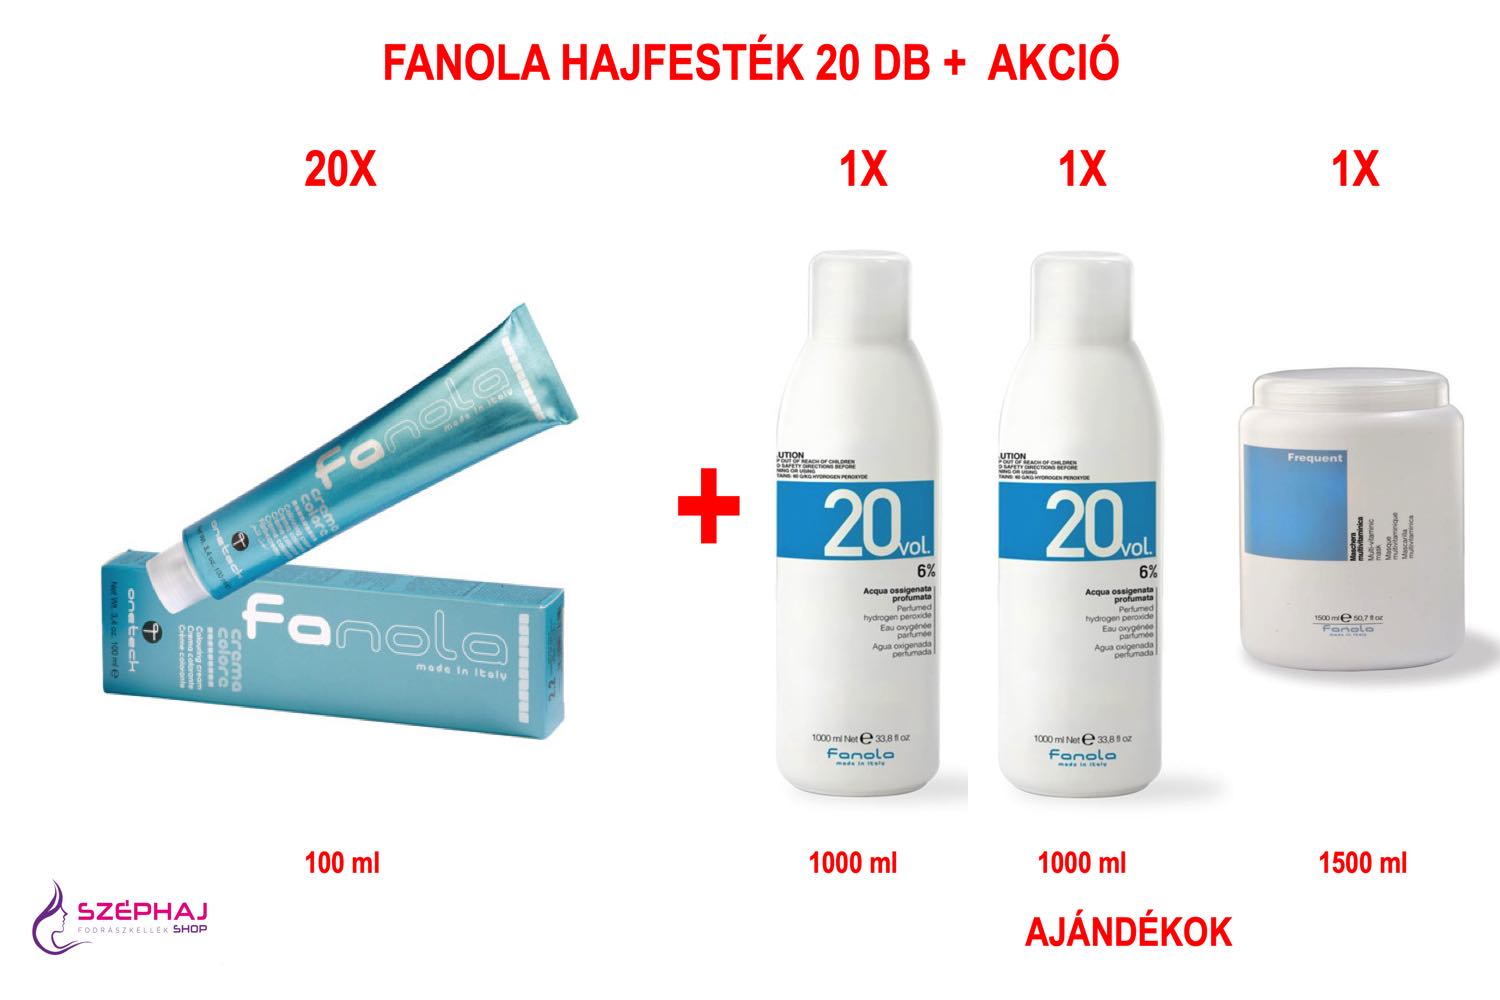 FANOLA Color hajfesték 20 + (2 x 6% Oxi 1000 ml + 1 x Frequent Mask 1500 ml)